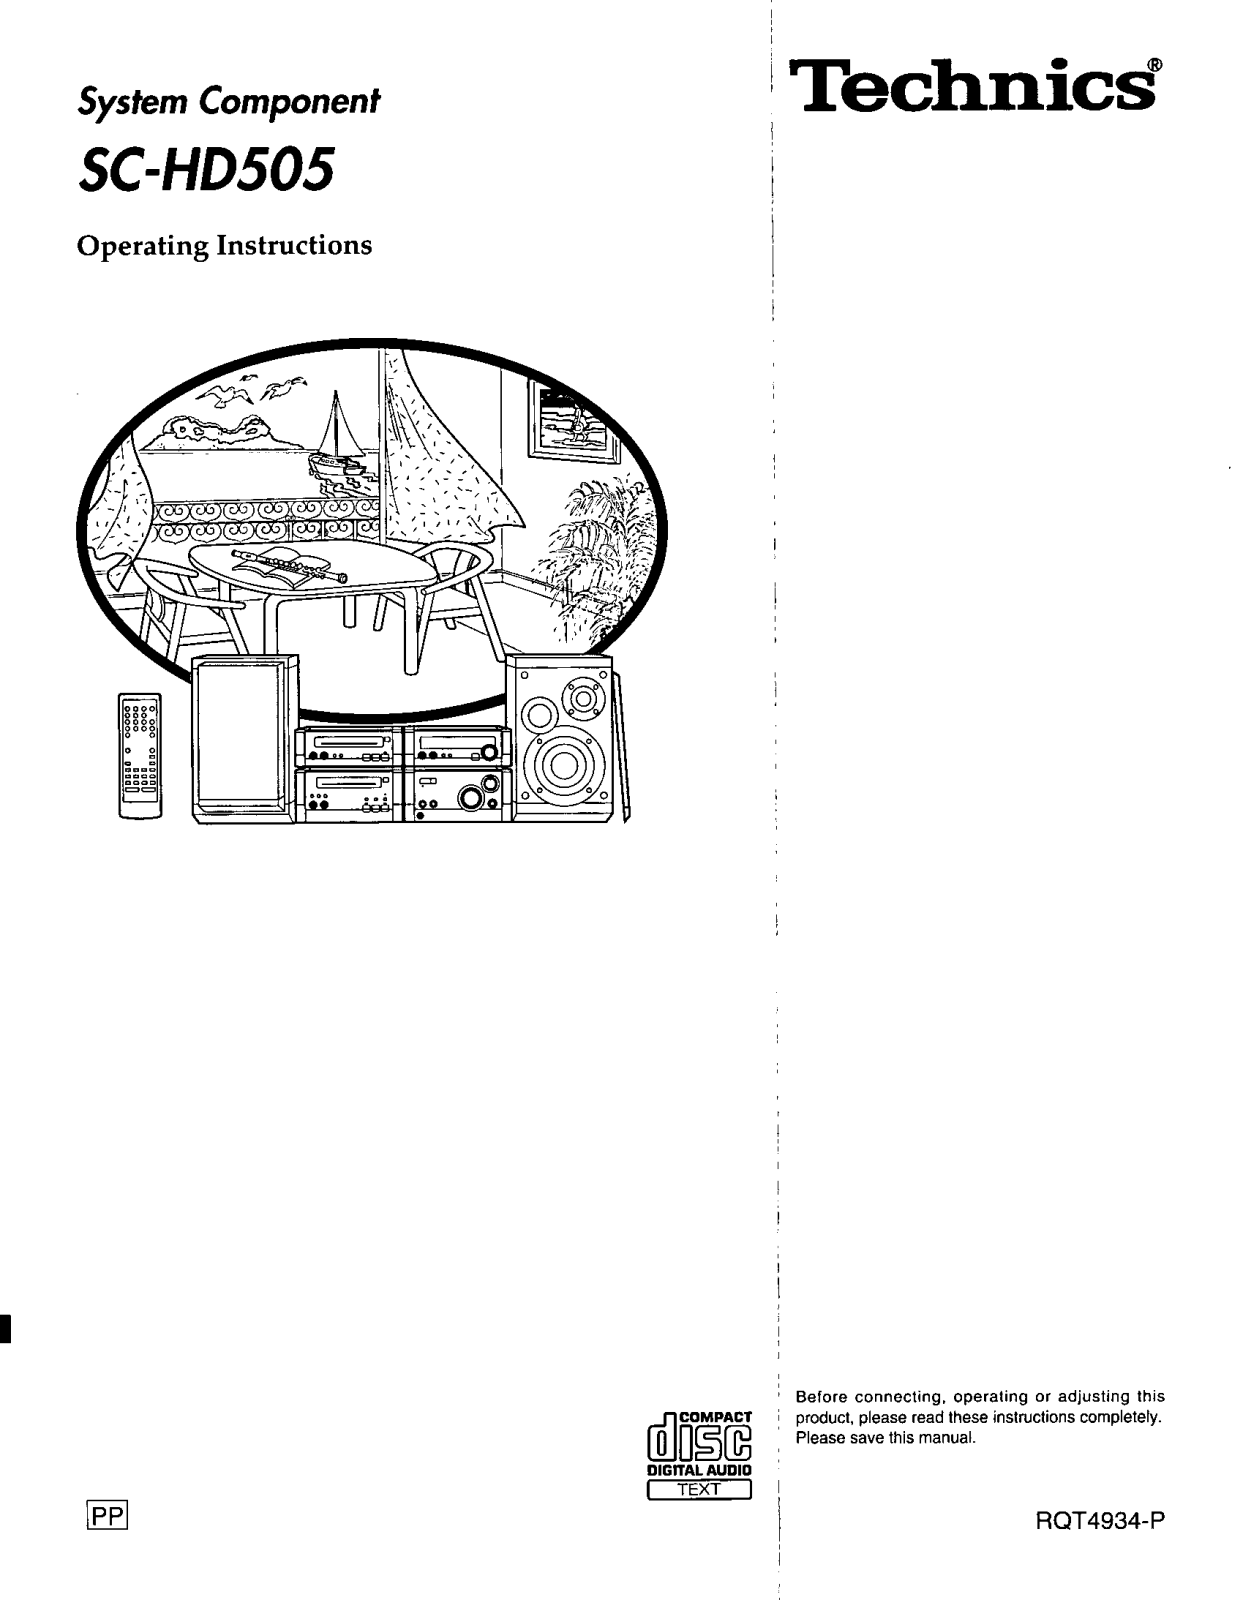 Technics SC-HD505 User Manual